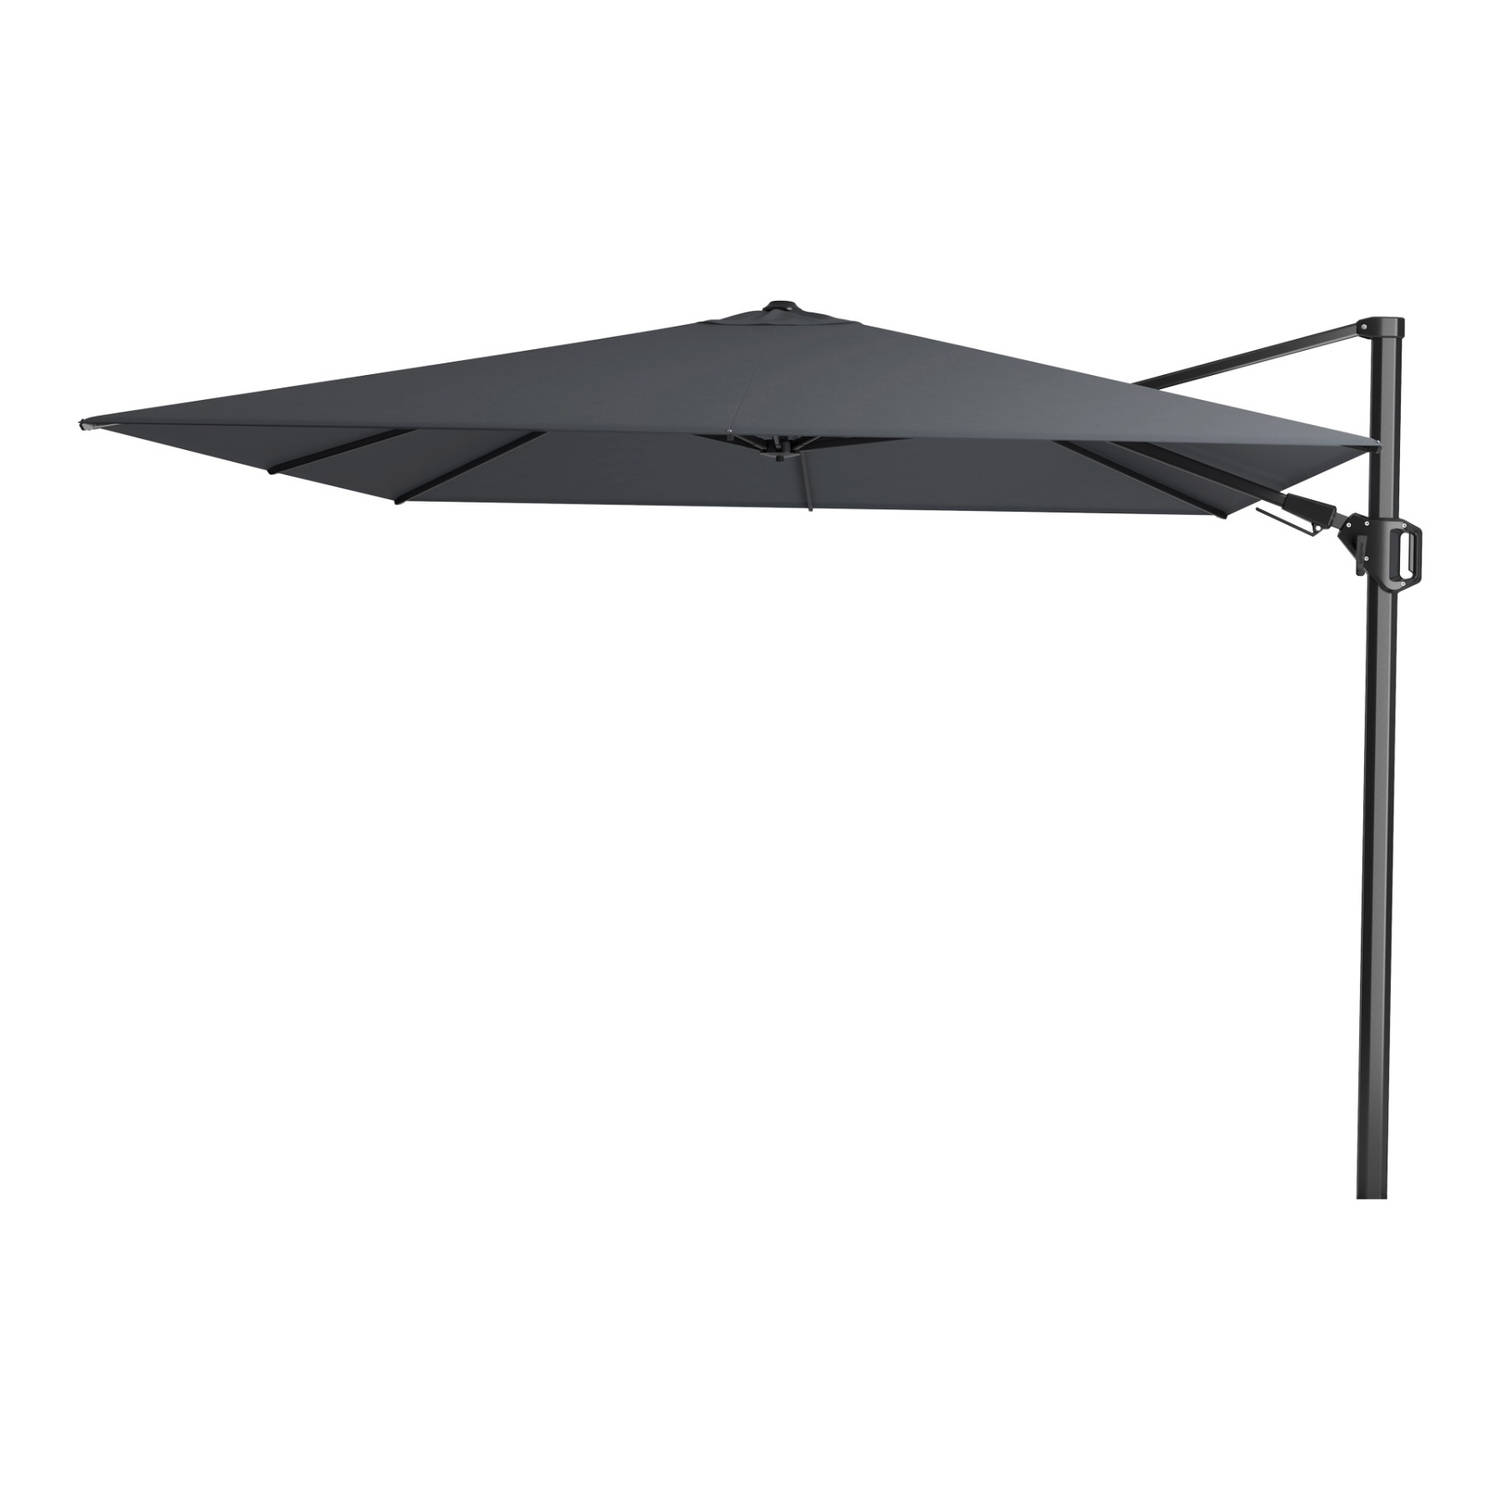 Platinum Challenger parasol T2 - 3x3 m. - Antraciet